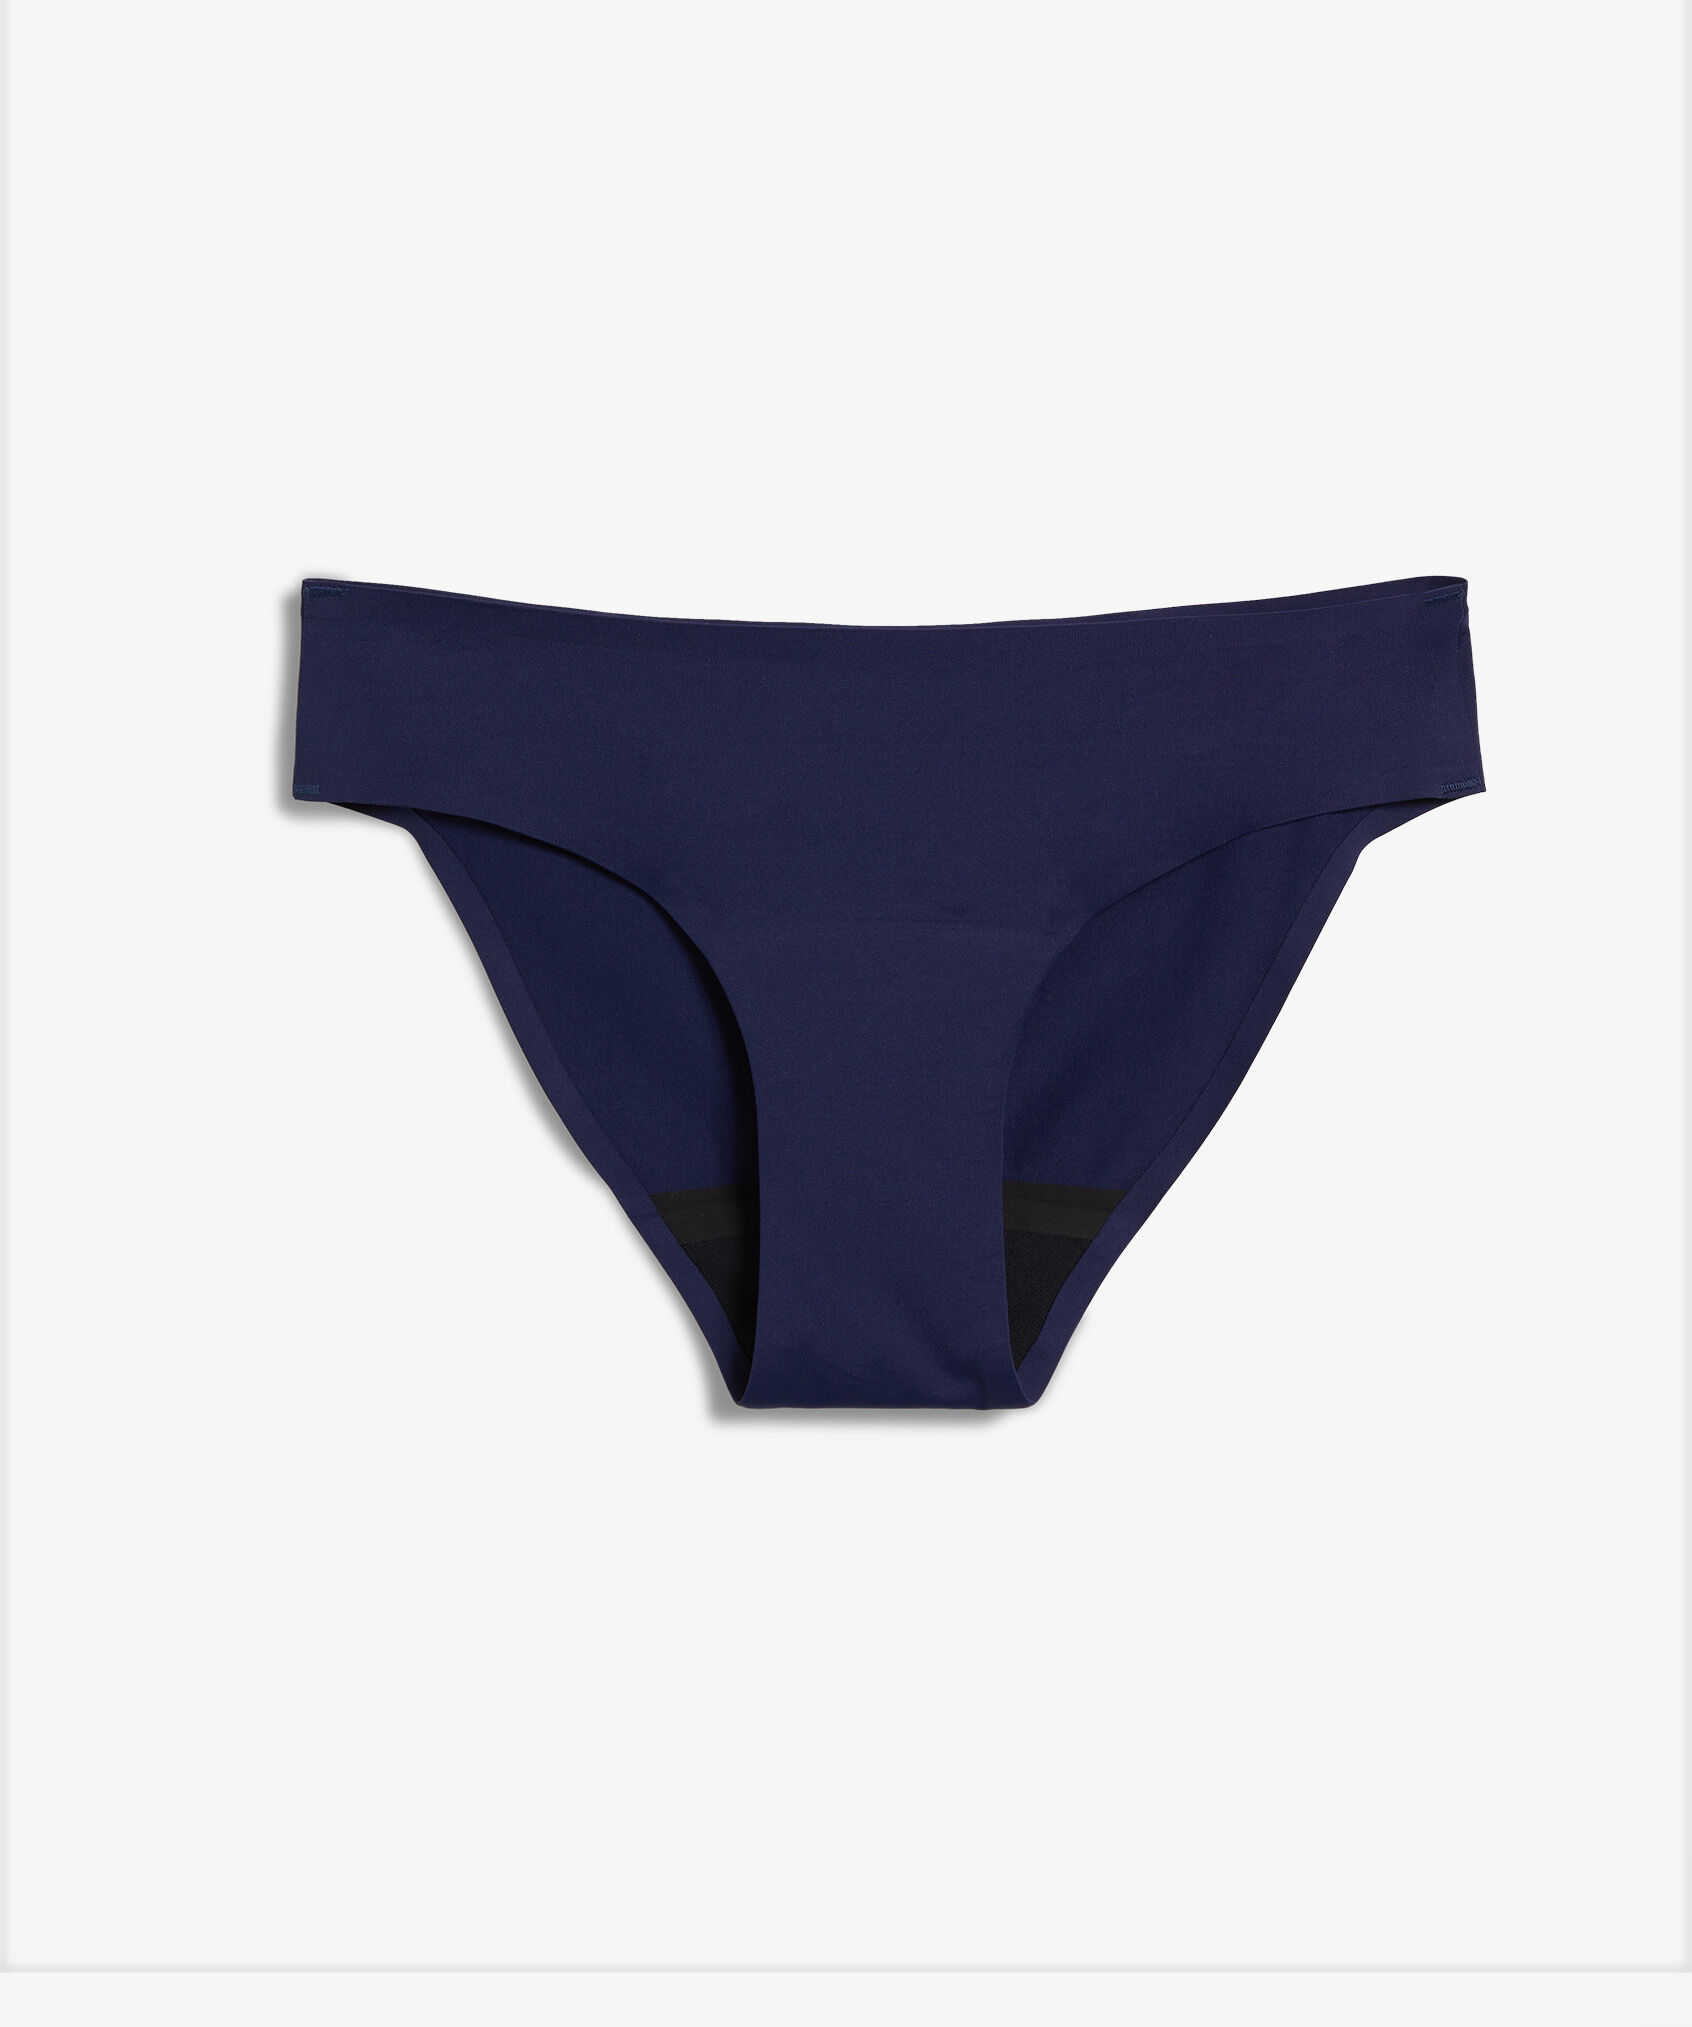 DIM PERIOD PANTY MEDIUM FLOW - Period underwear - dark blue - Zalando.de